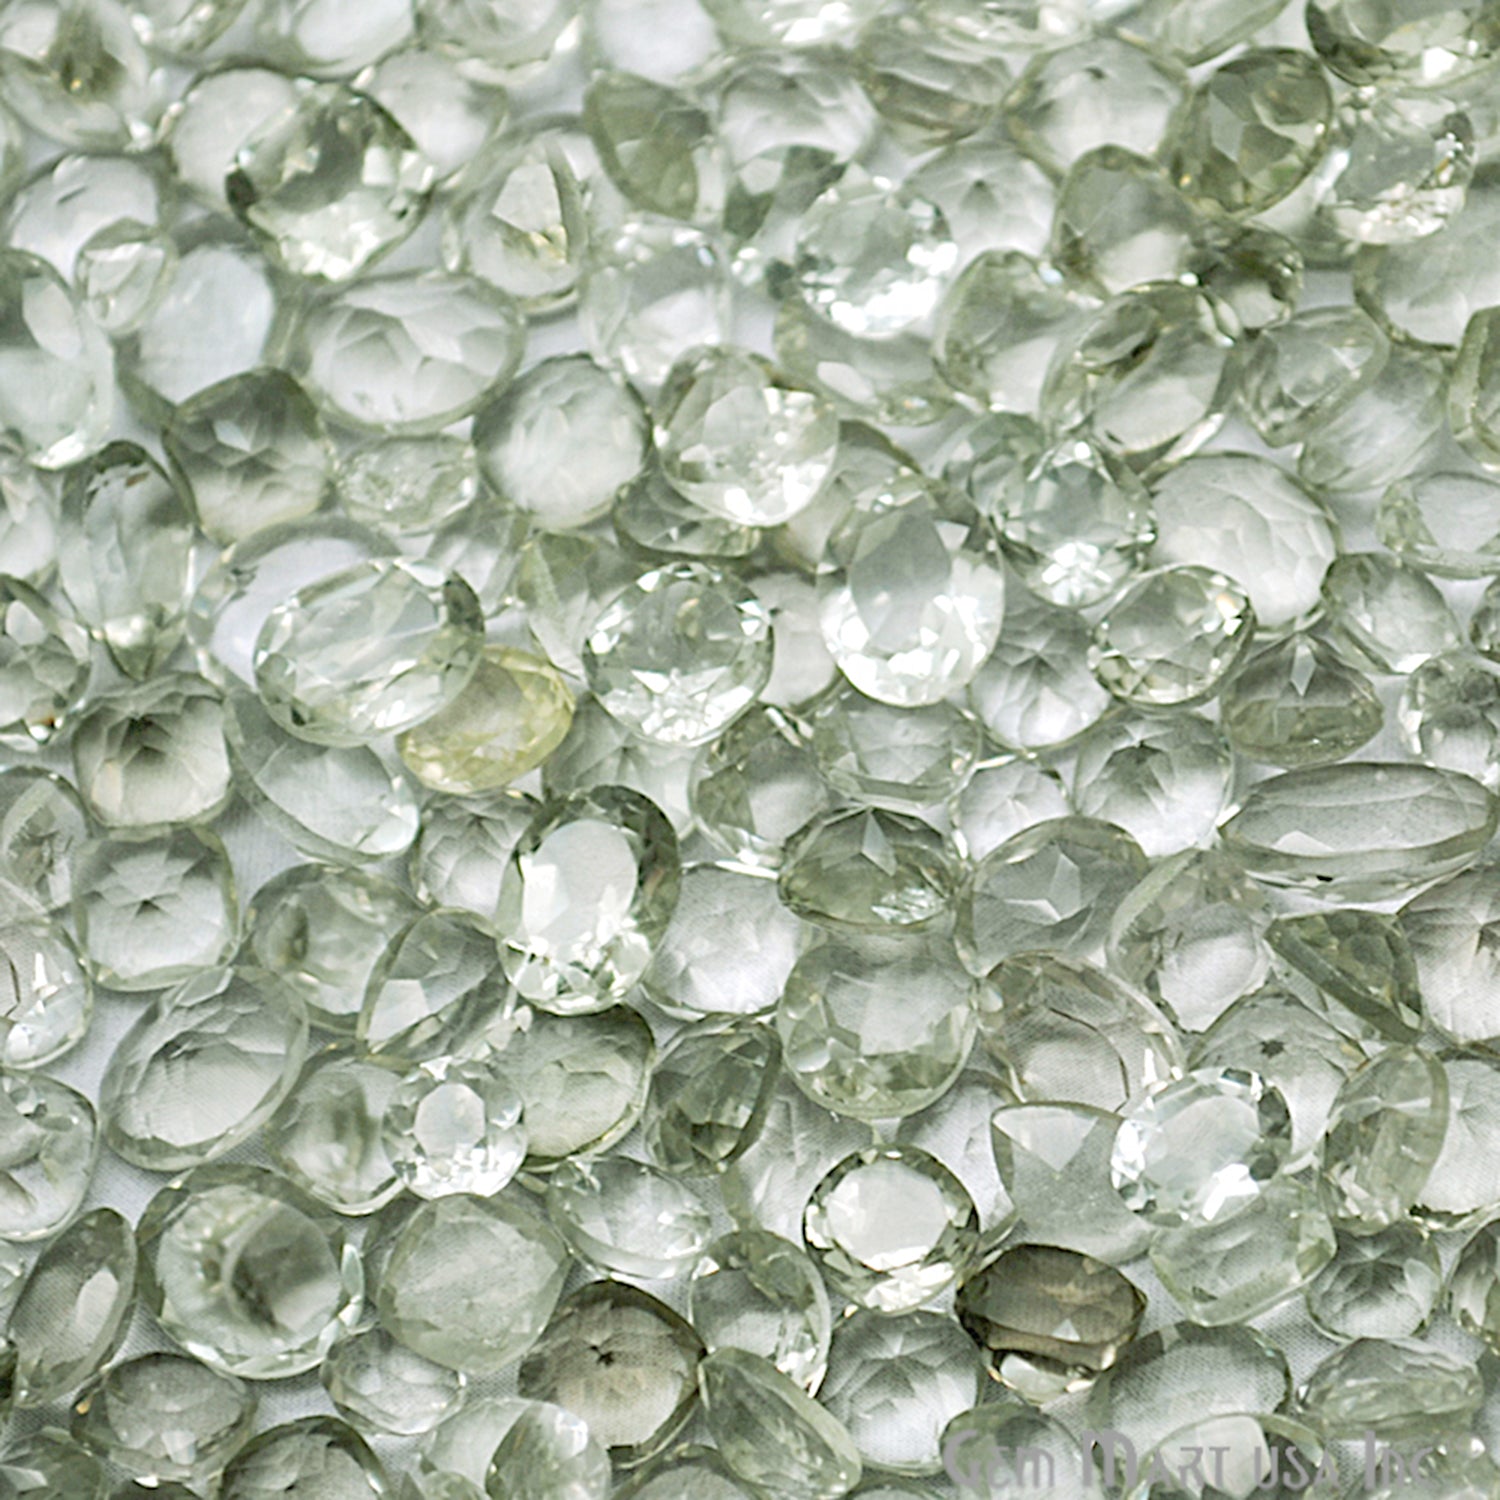 50 Carat Green Amethyst Mix Shape Wholesale Loose Gemstones - GemMartUSA